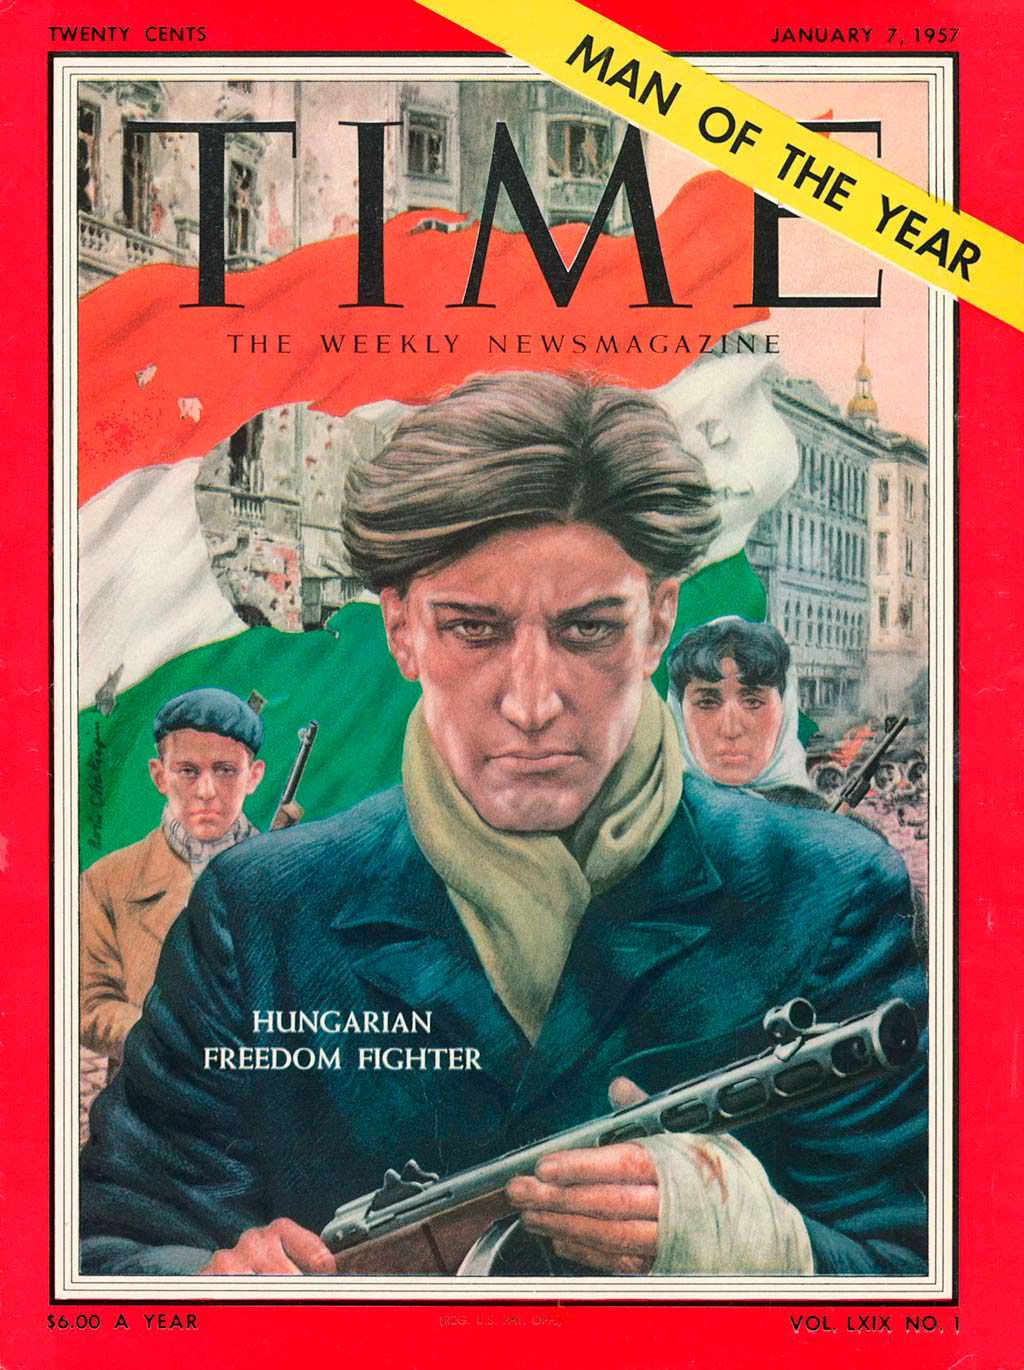 1956 год. Венгерский борец за свободу на обложке Time